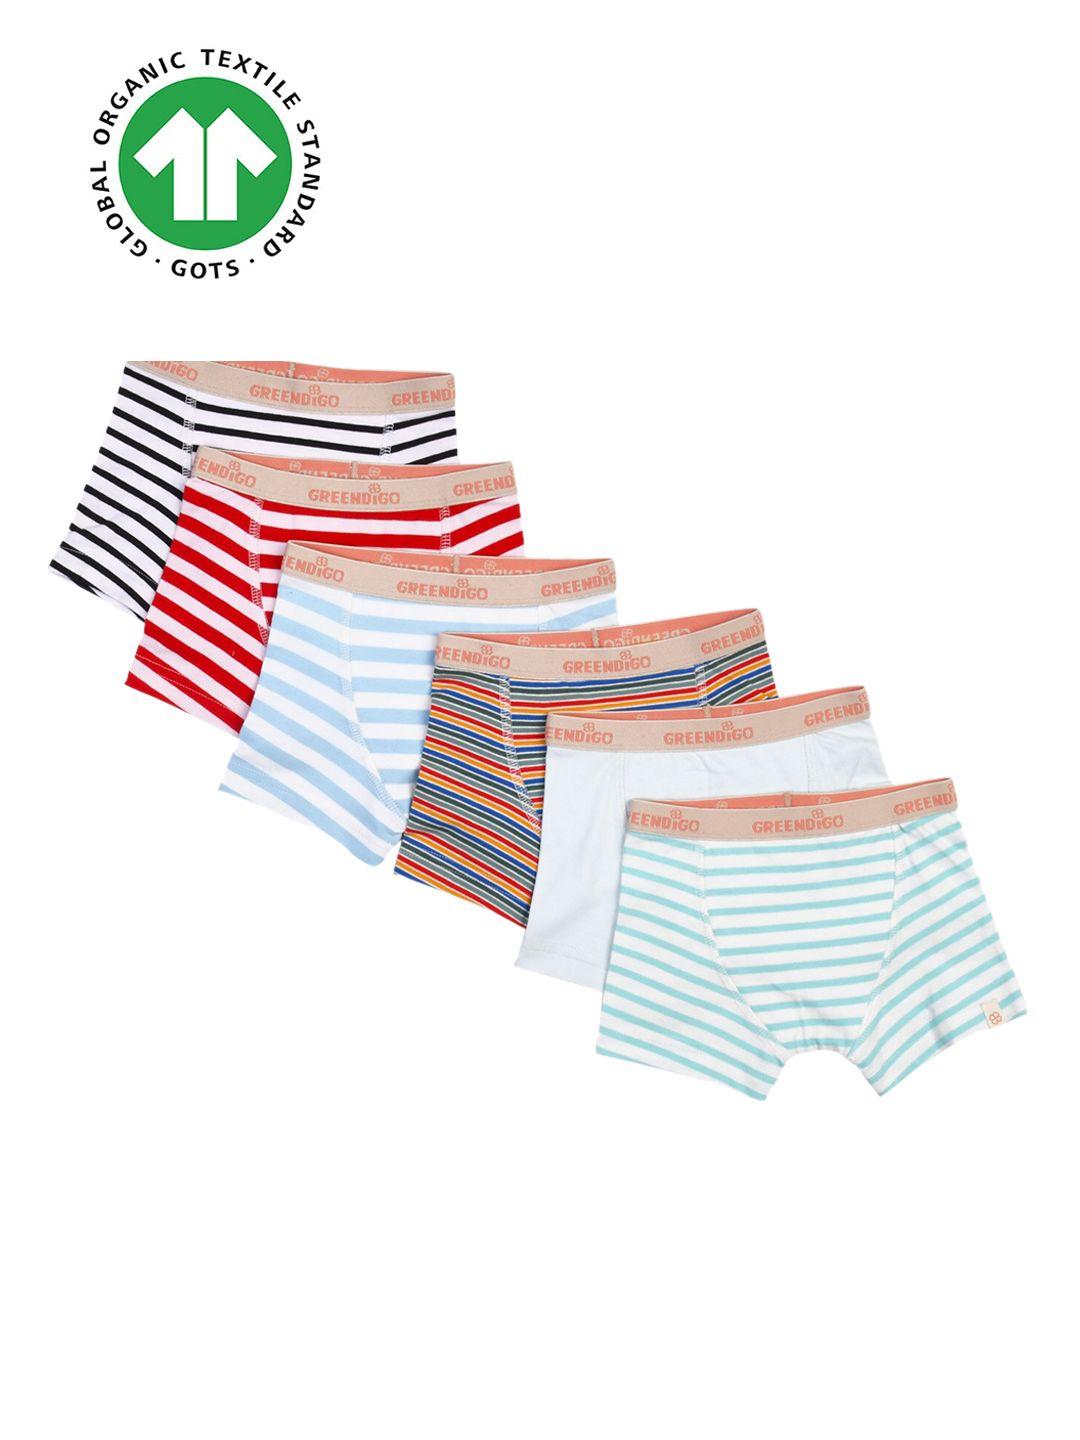 greendigo-boys-pack-of-6-striped-organic-cotton-boy-shorts